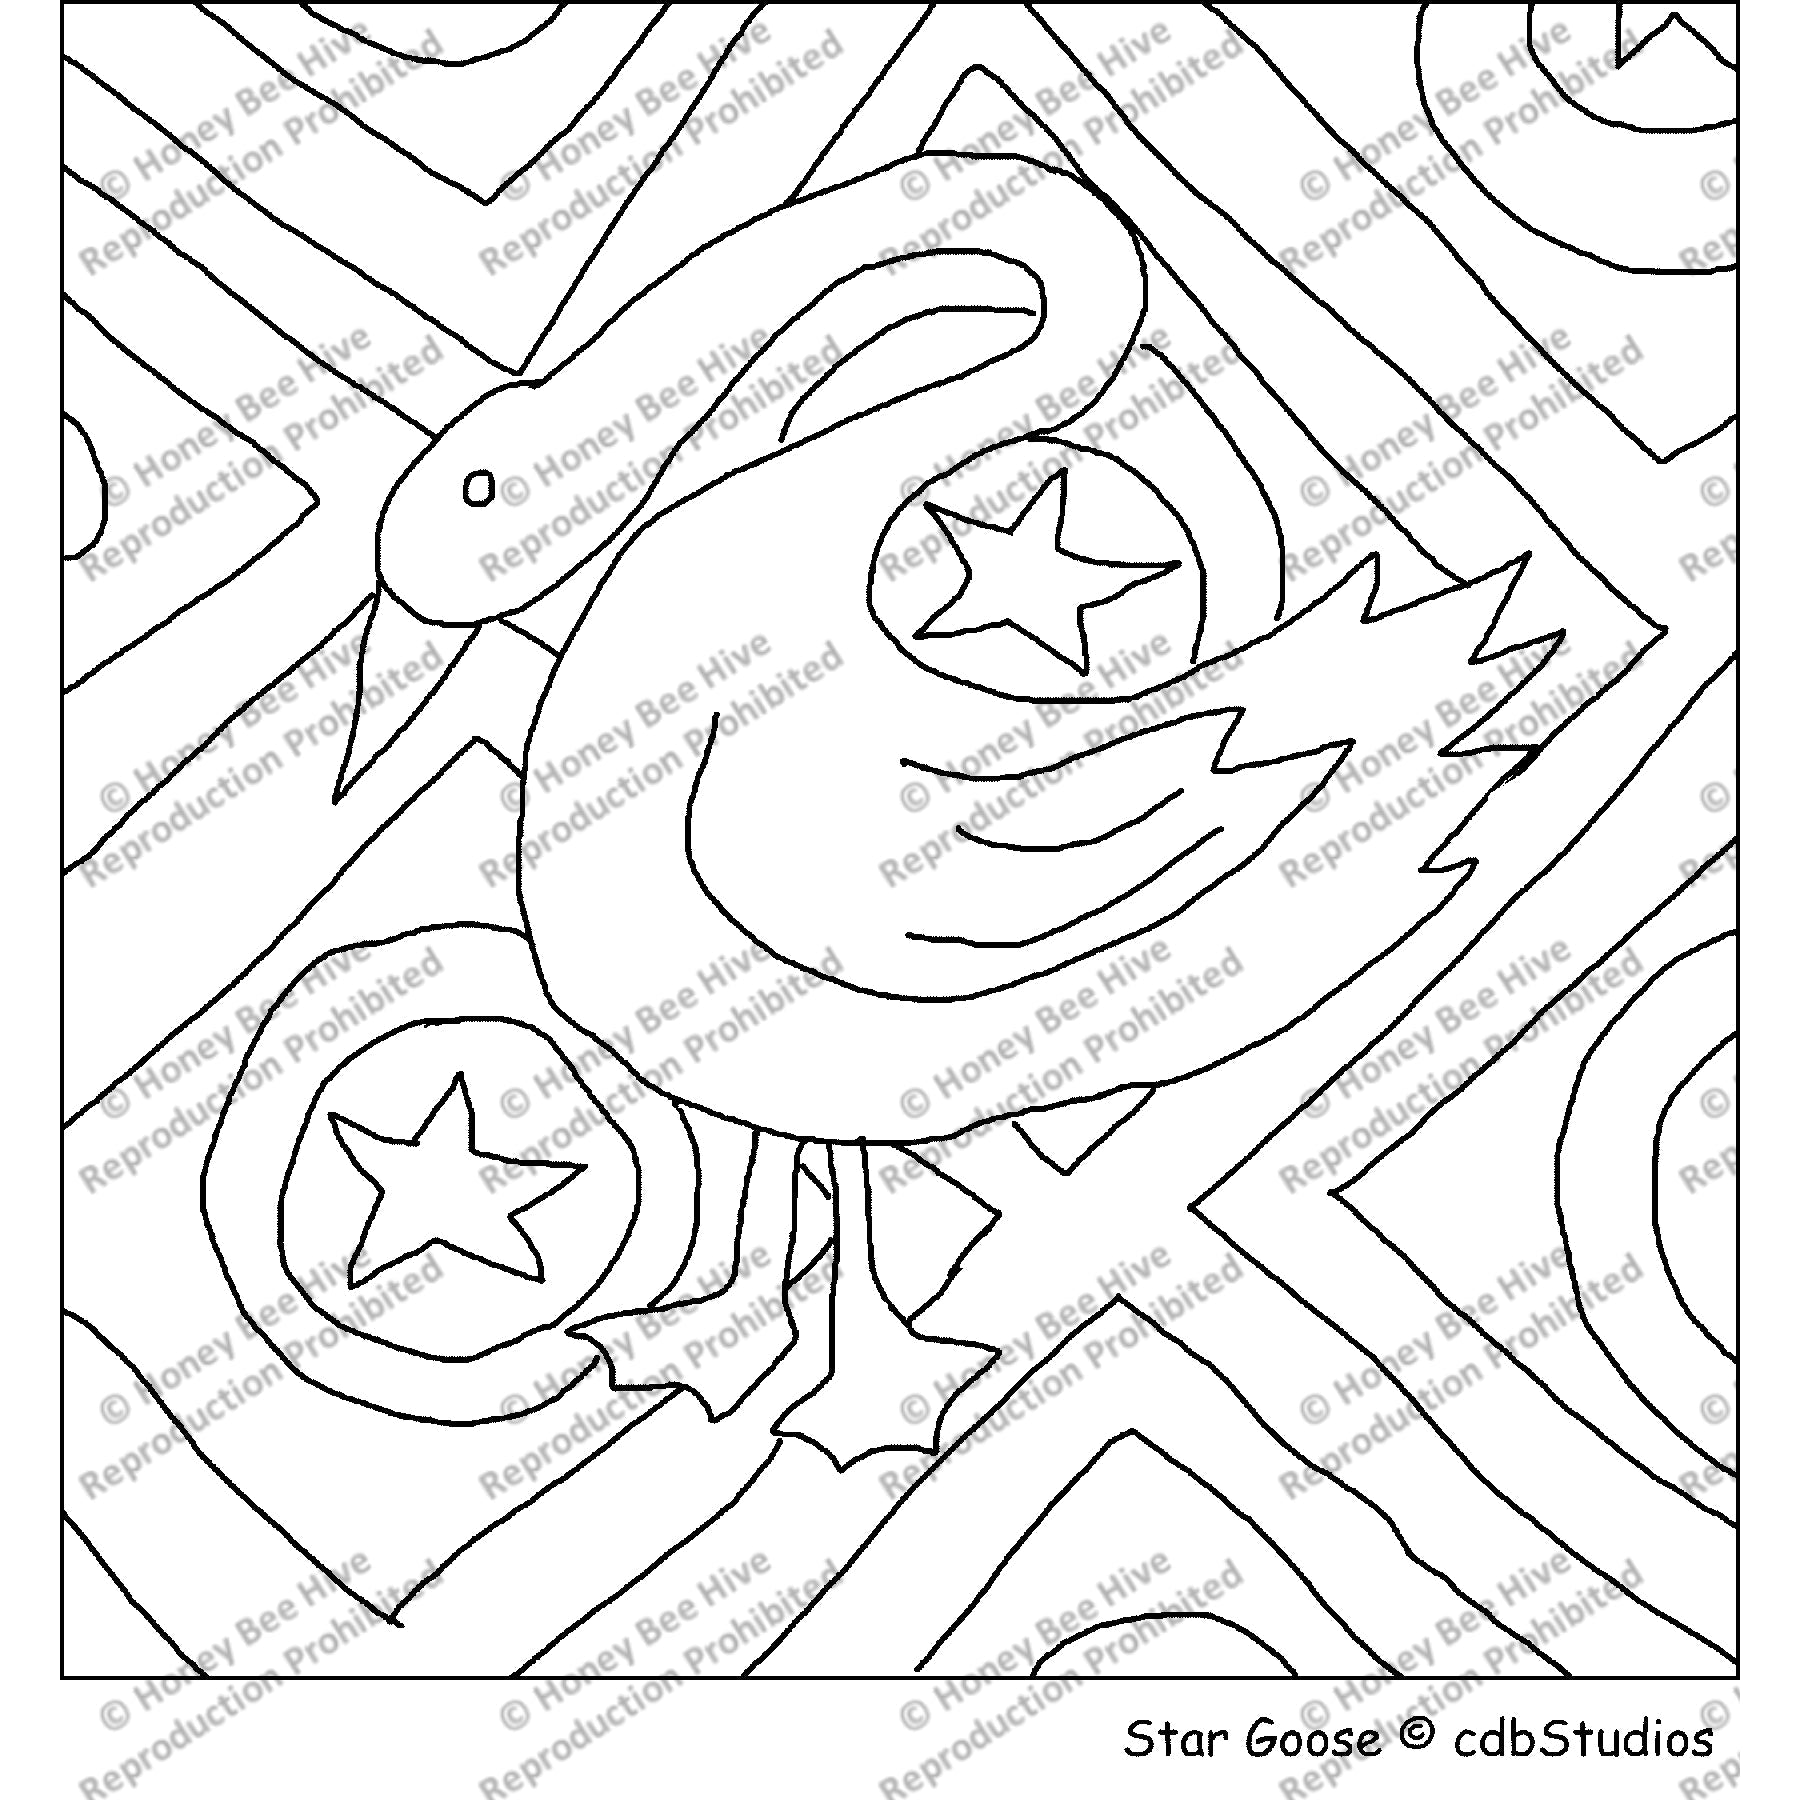 Star Goose, rug hooking pattern